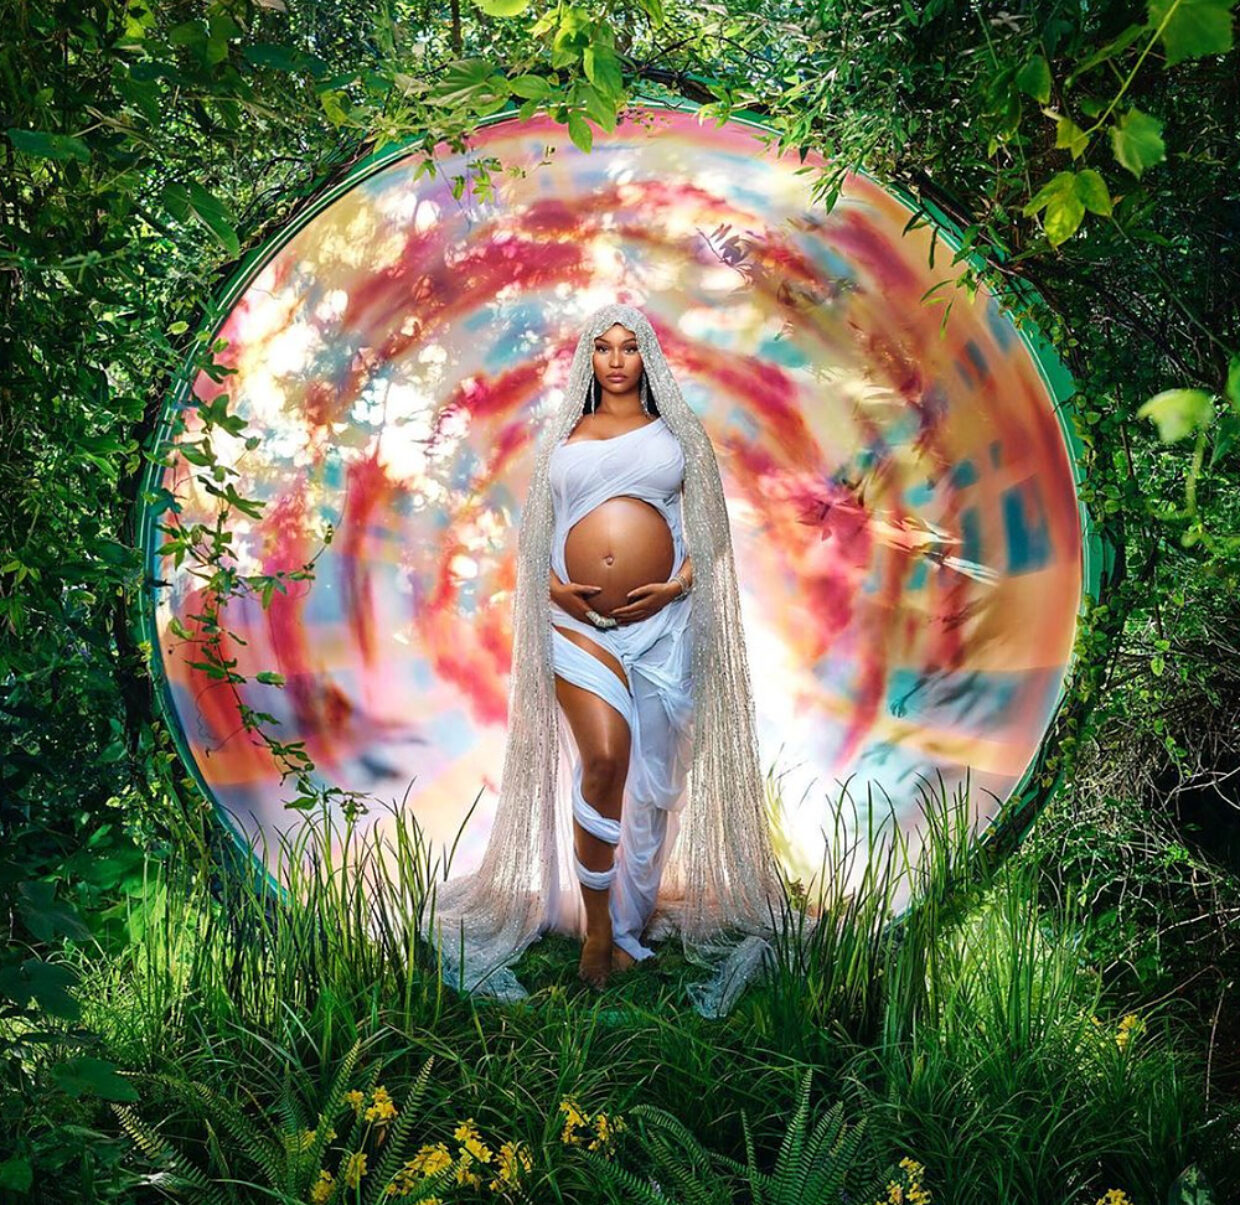 Nicki Minaj Announces Pregnancy with “Virgin Mary” David LaChapelle Shoot | 1